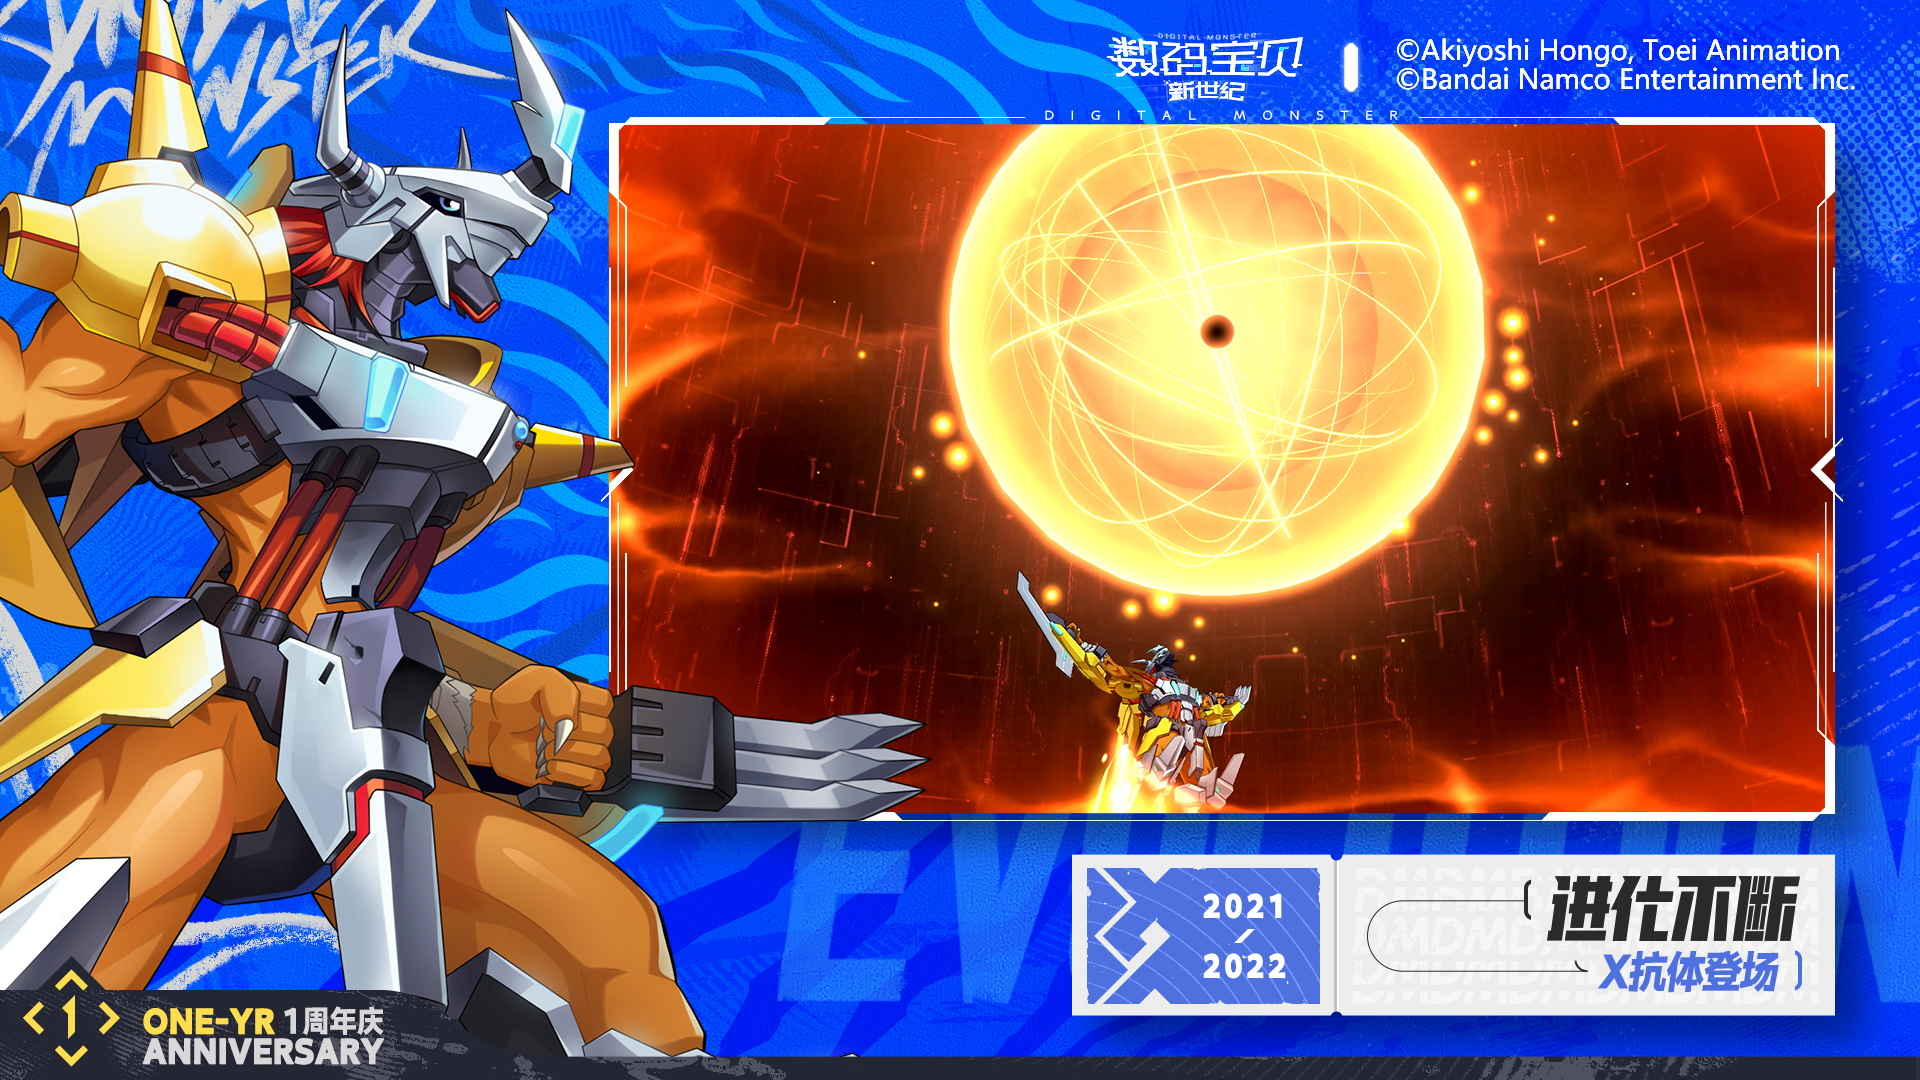 Screenshot of Digimon: New Generation